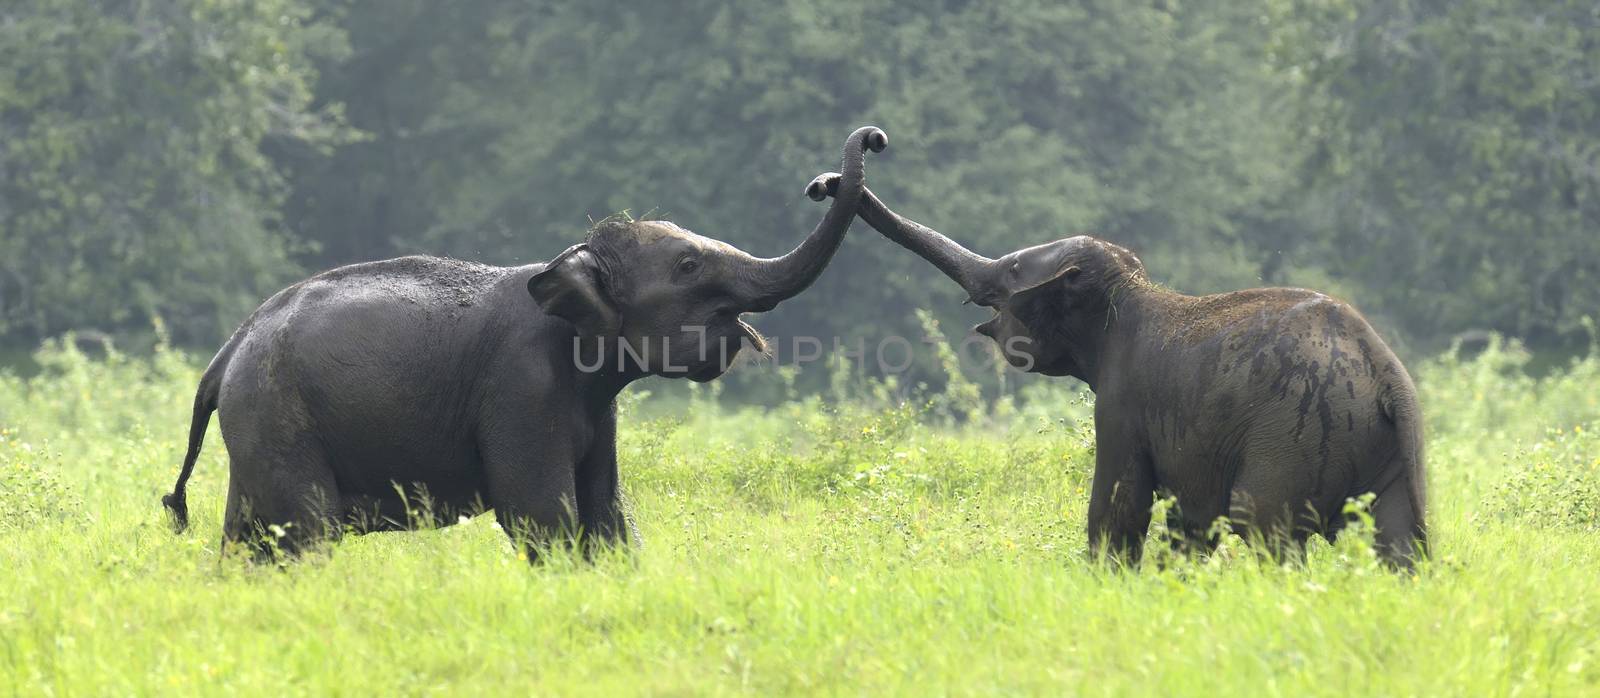 Elephants by byrdyak